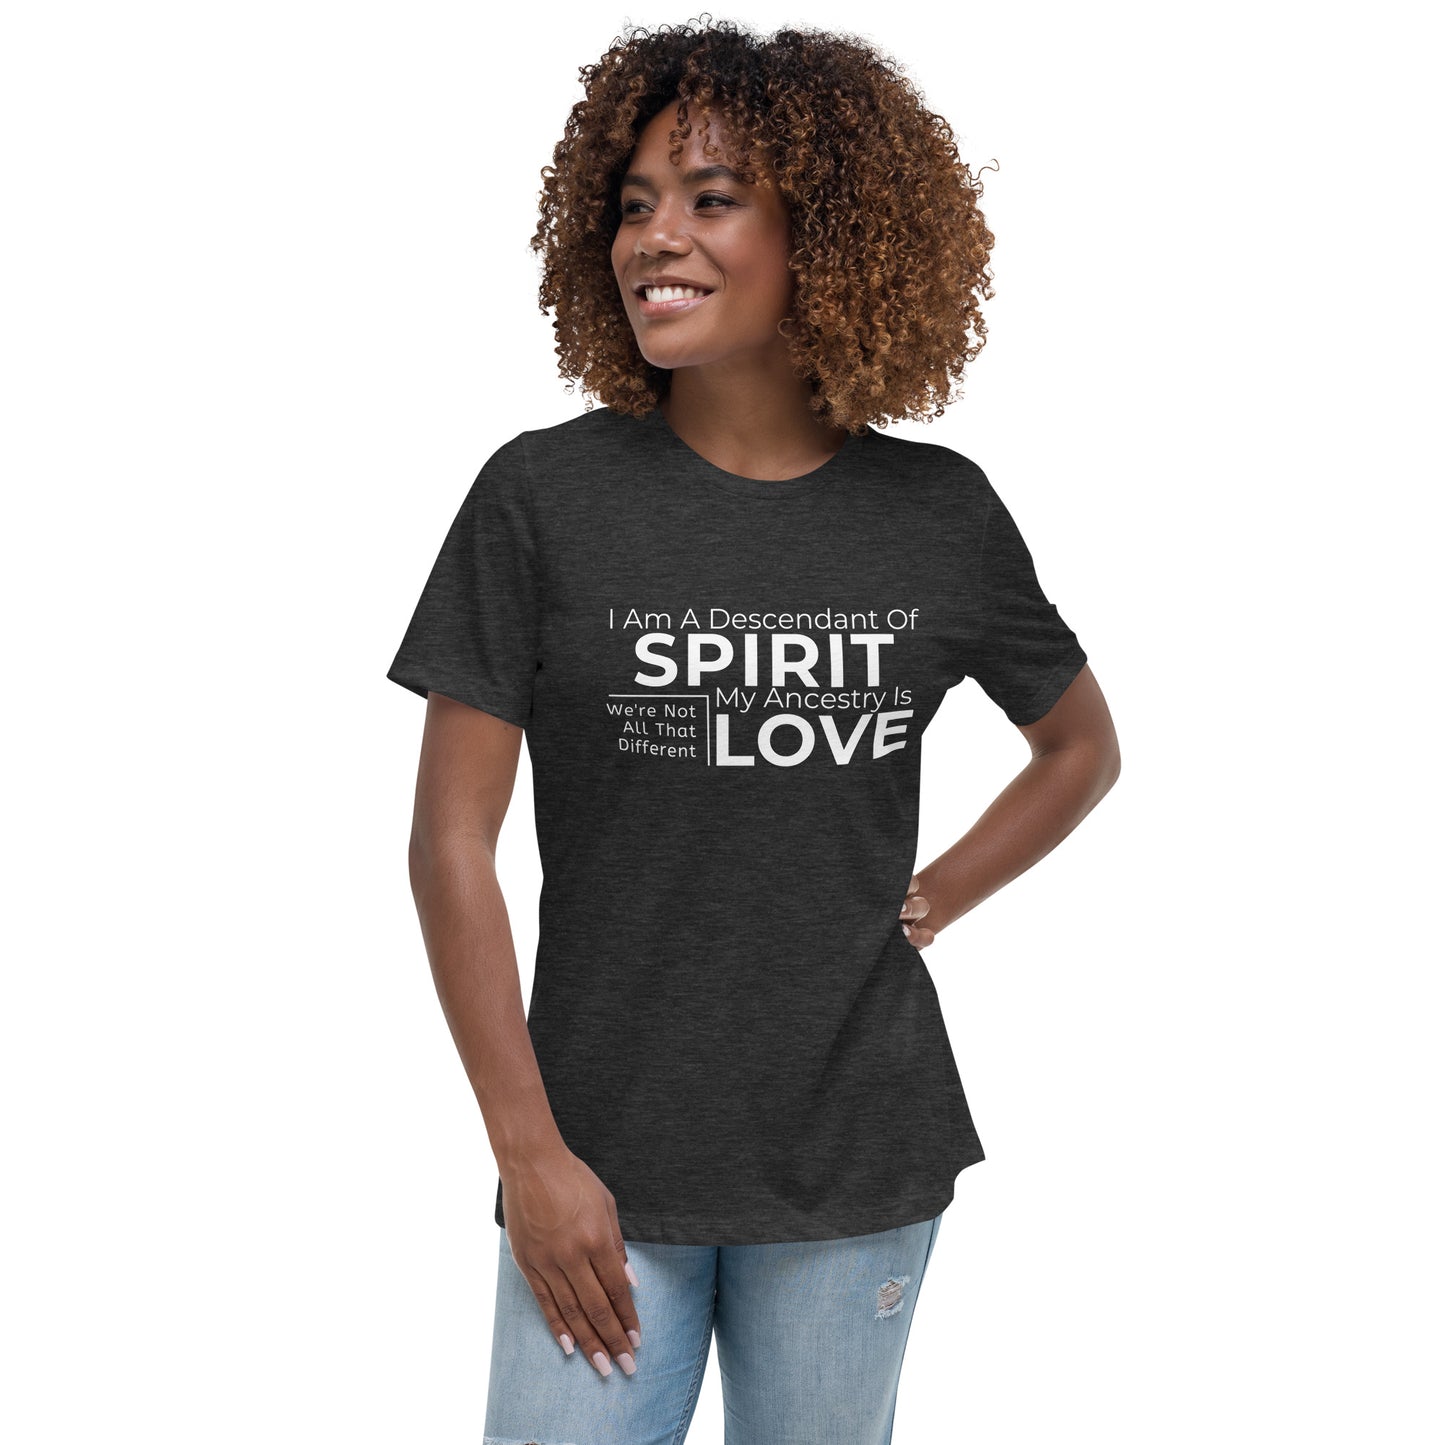 Descendant Of Spirit: Women's Relaxed T-Shirt